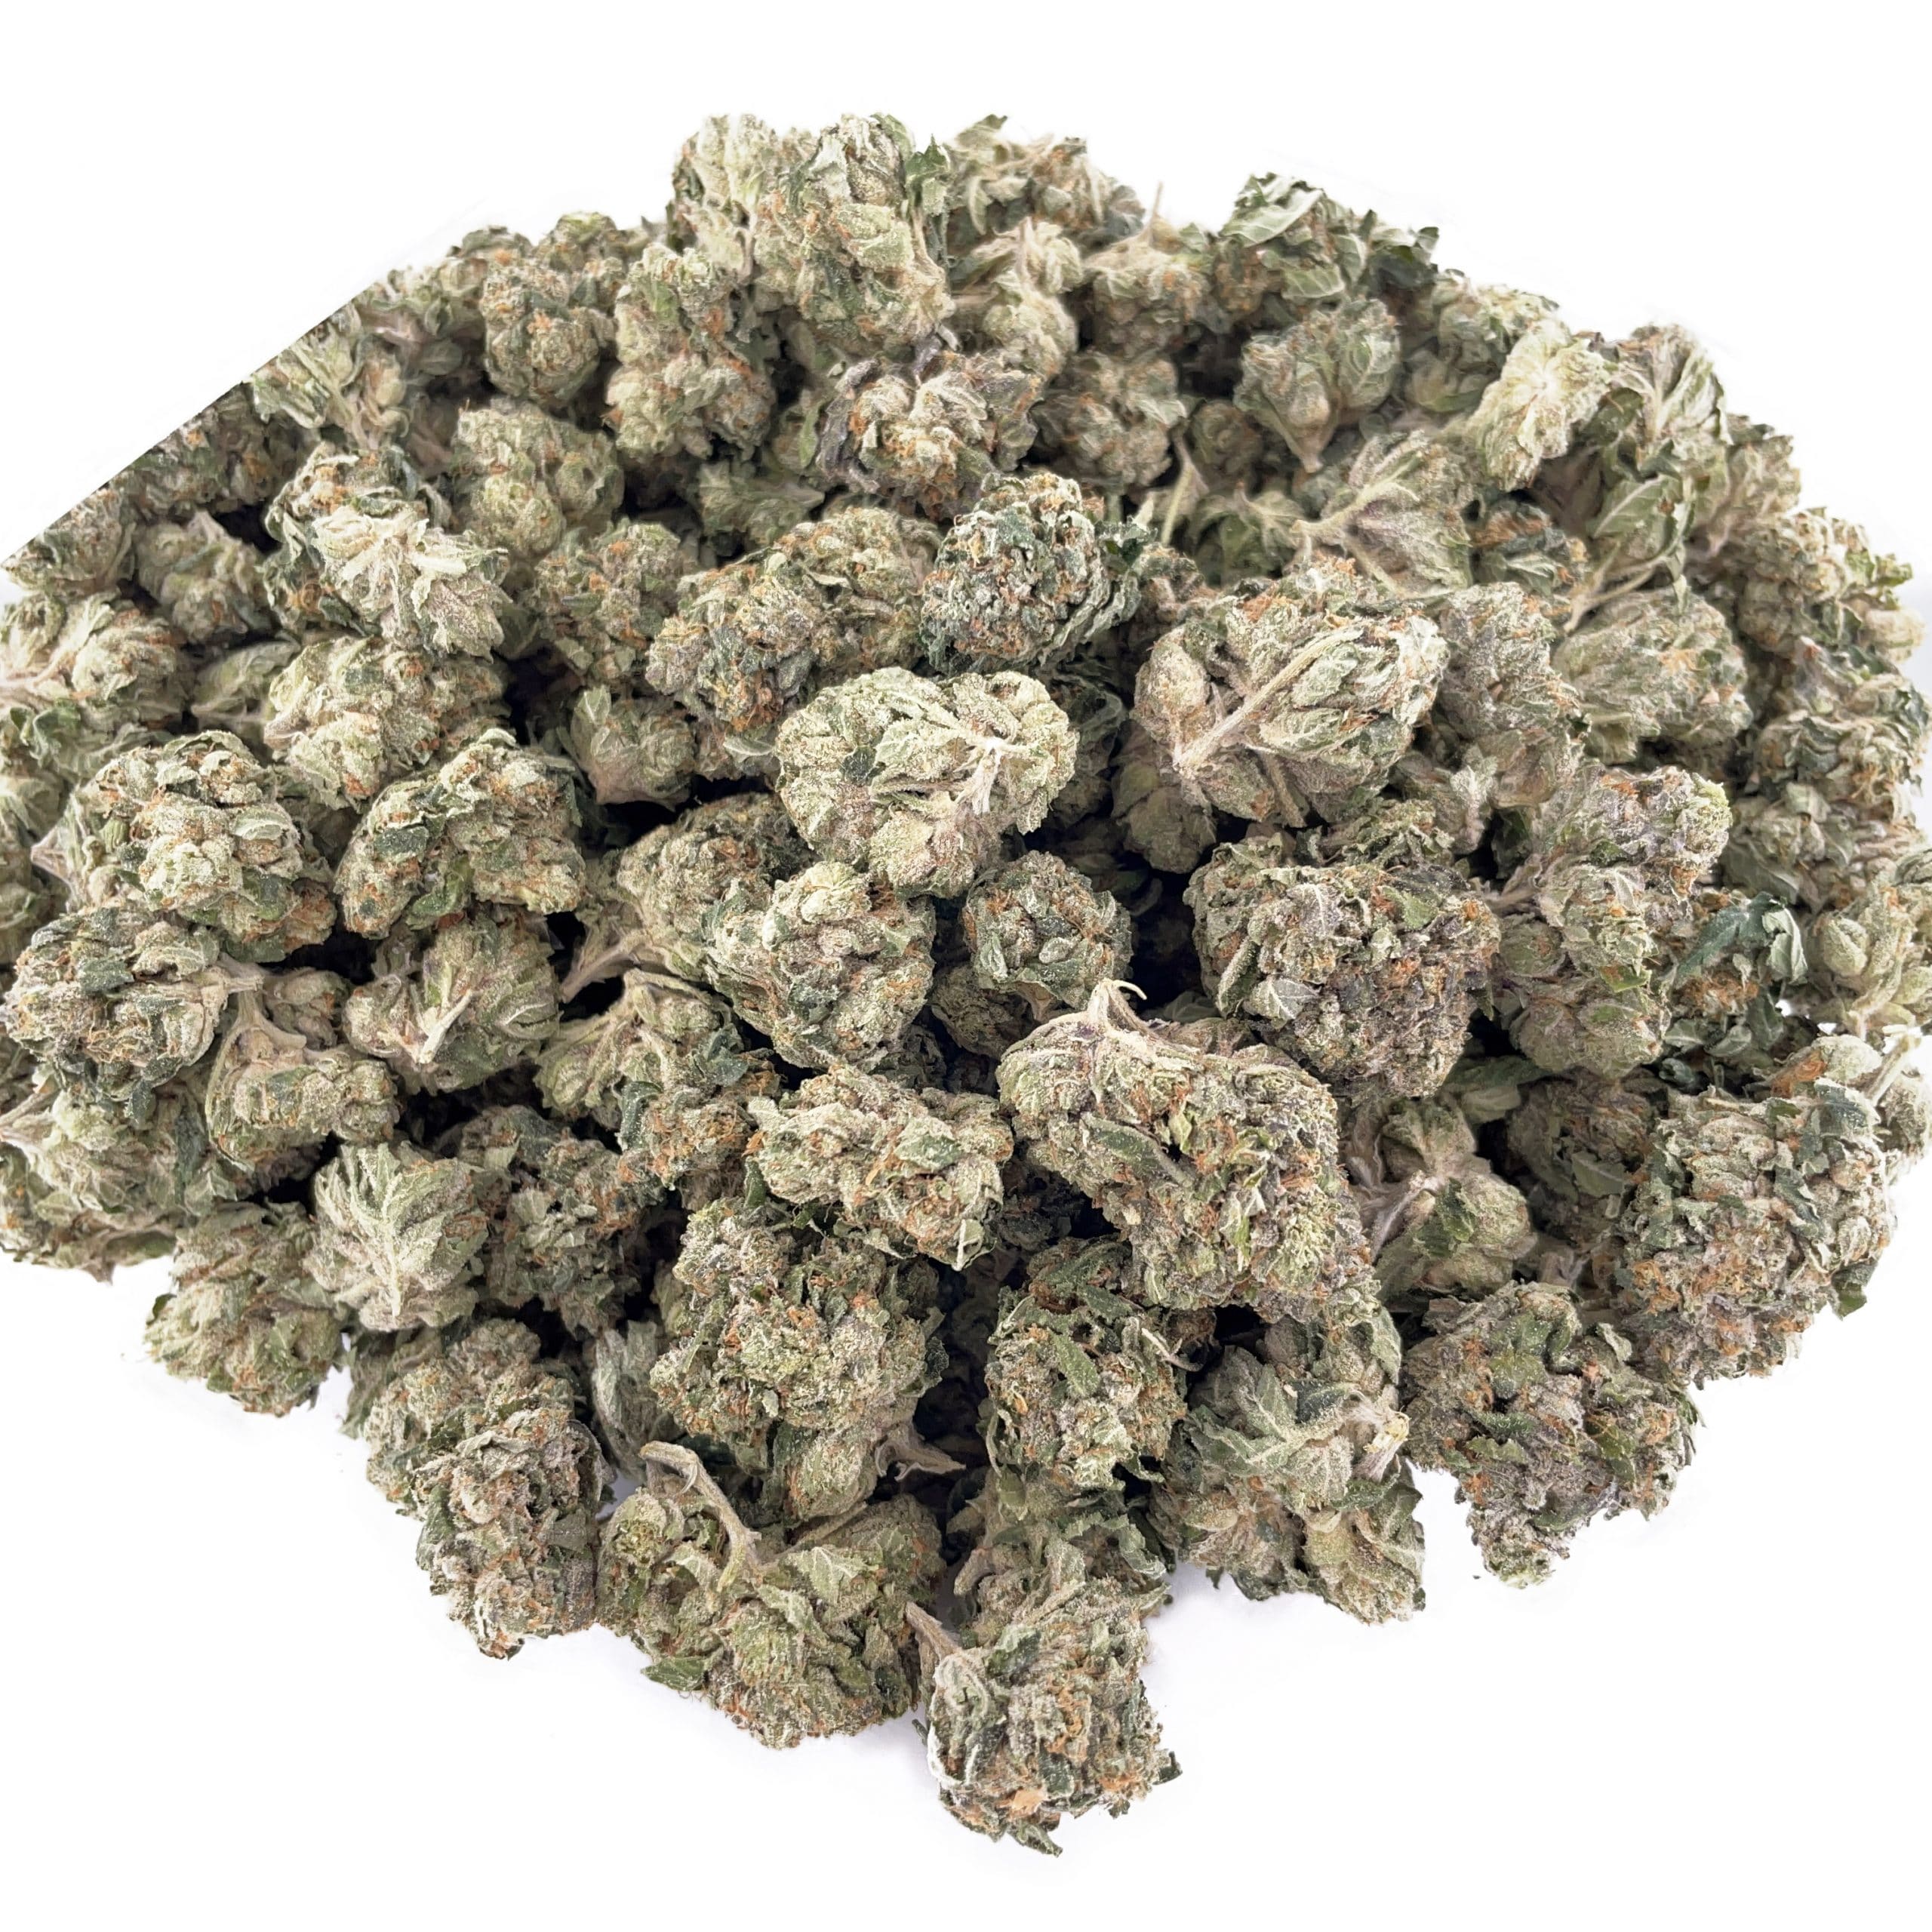 buy-popcorn-strain-cannabis-online-dispensary-ganja-west-rockstar-wholesale-scaled-2.jpg